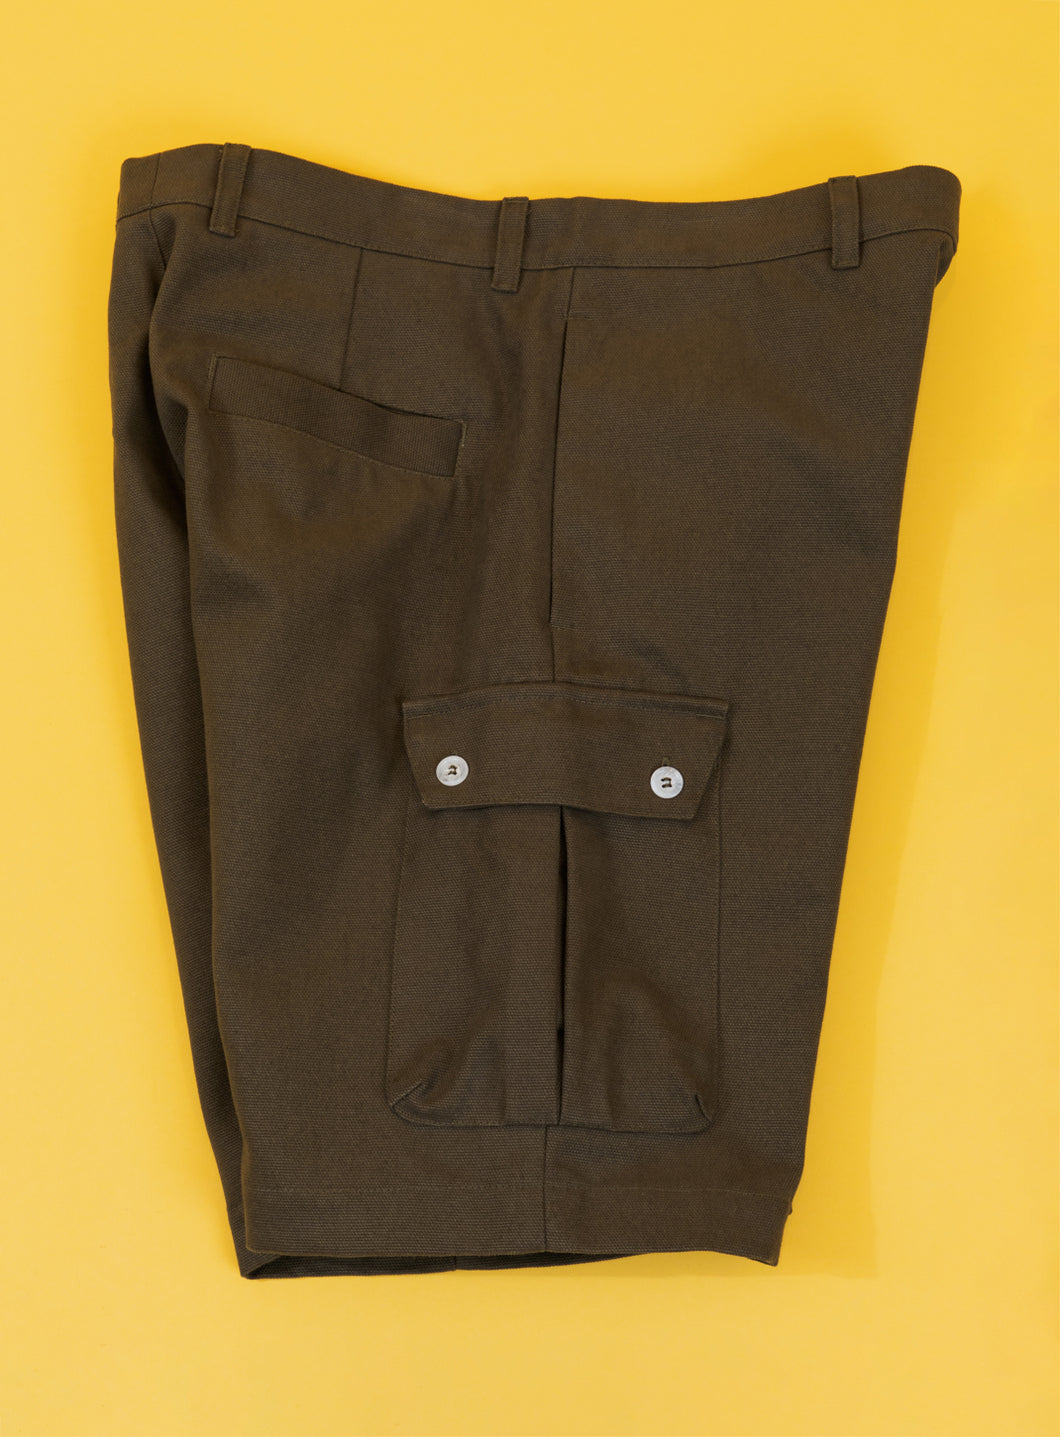 Bermuda Shorts with Envelope Pockets in Khaki Canvas